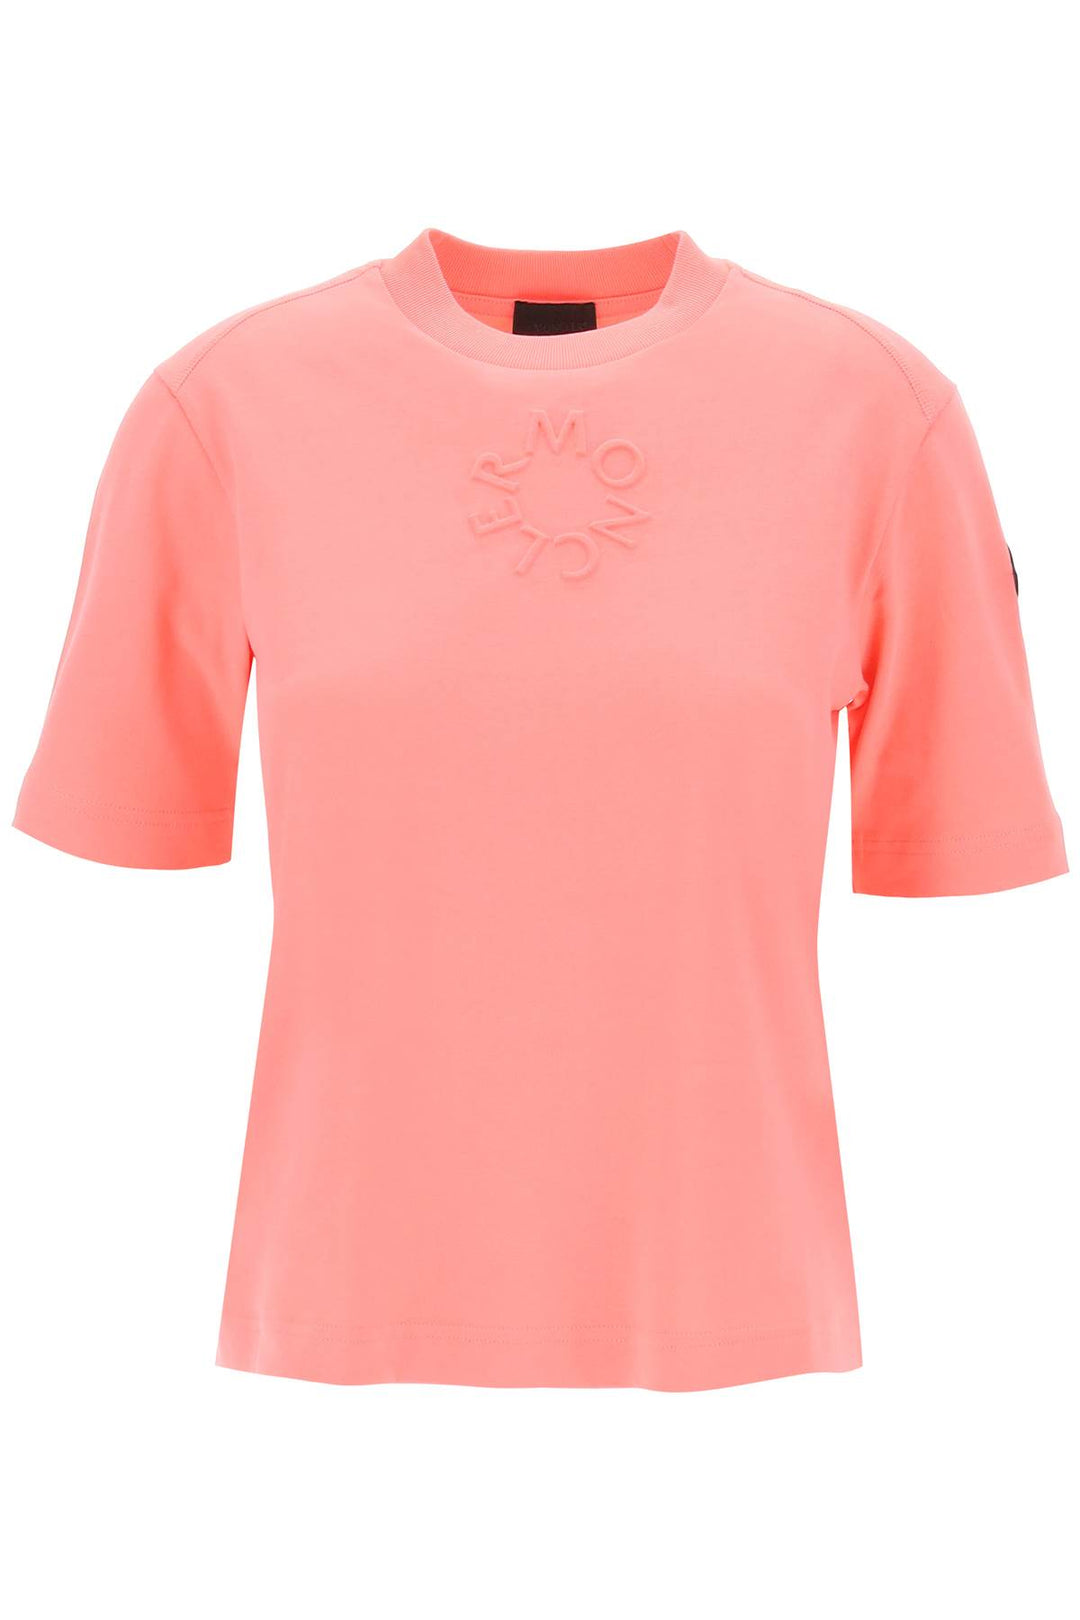 Moncler Embossed Logo T Shirt   Rosa